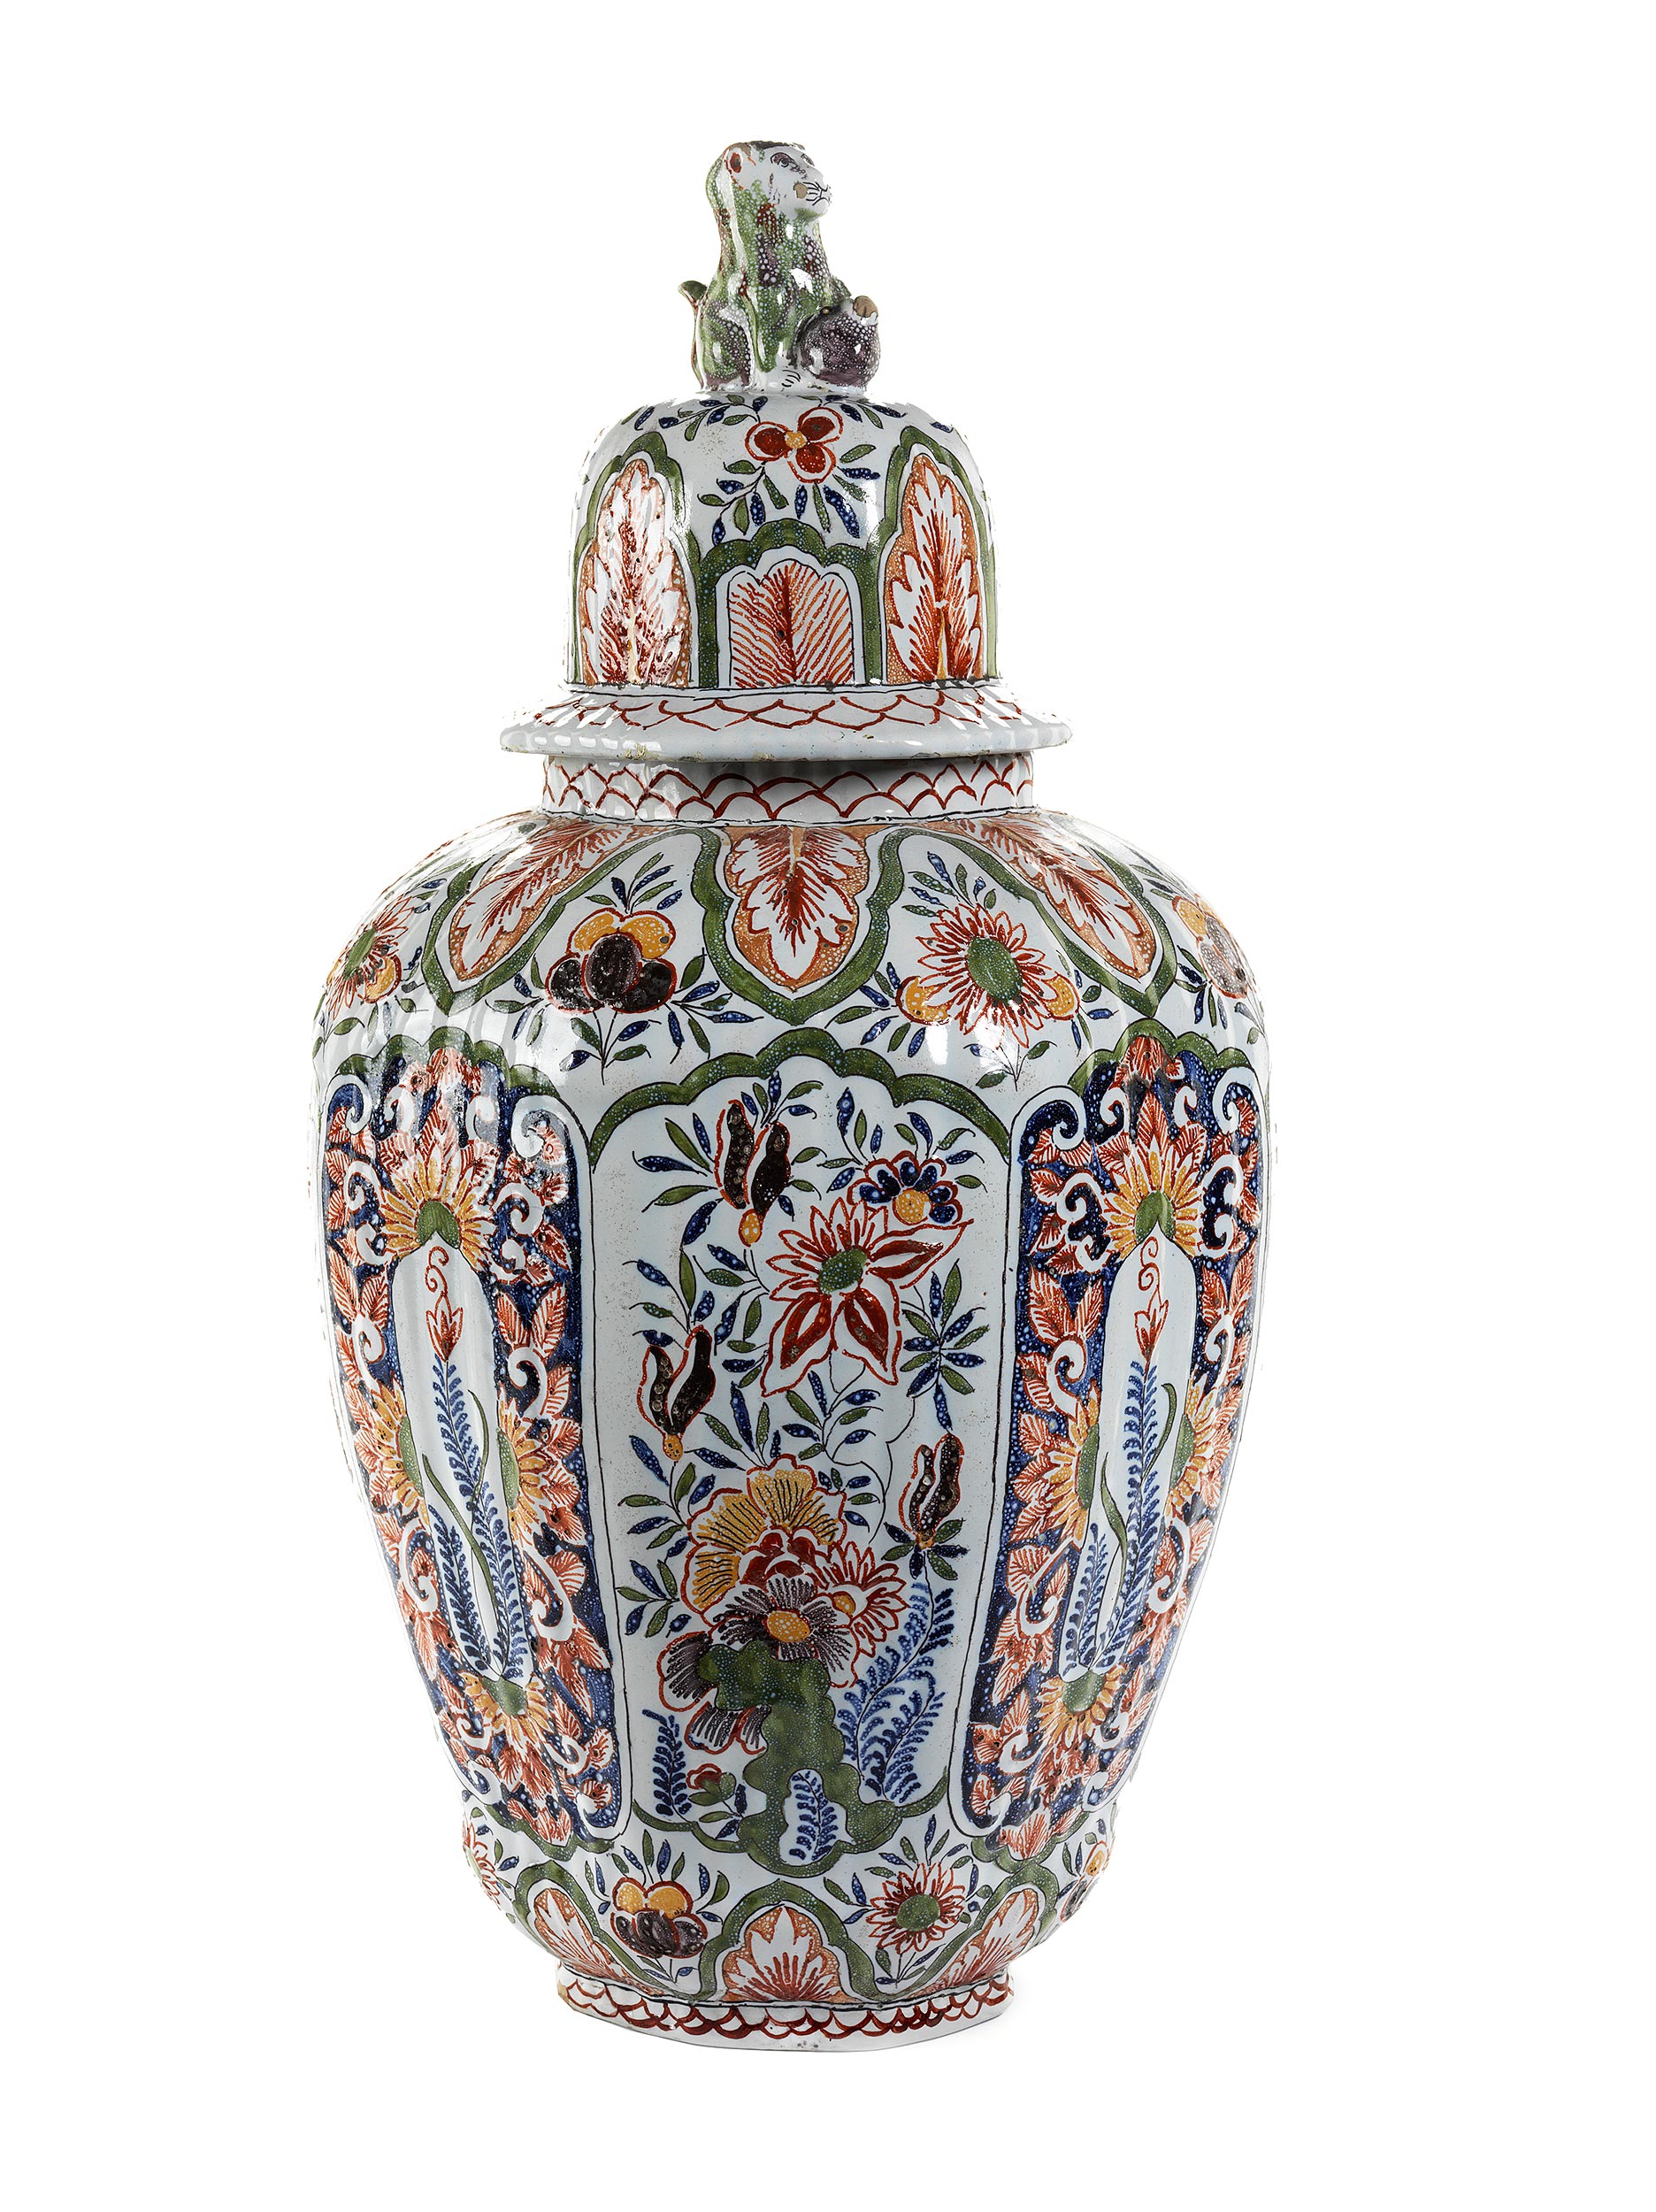 Große barocke Vase